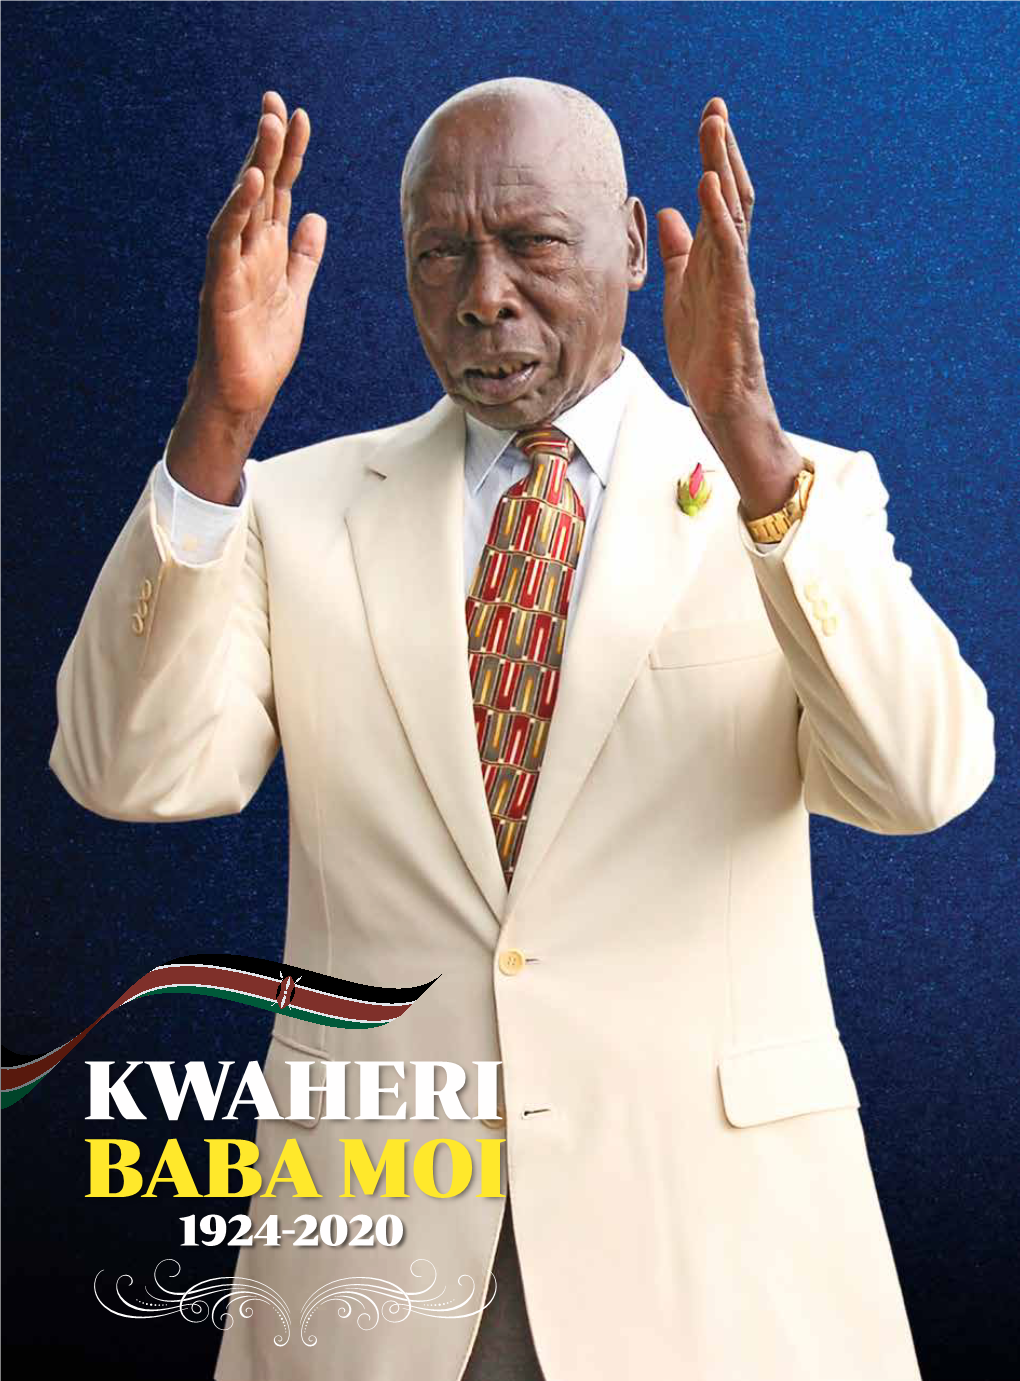 Kwaheri Baba Moi 1924-2020 2 President Daniel Arap Moi | 1924-2020 the Statesman